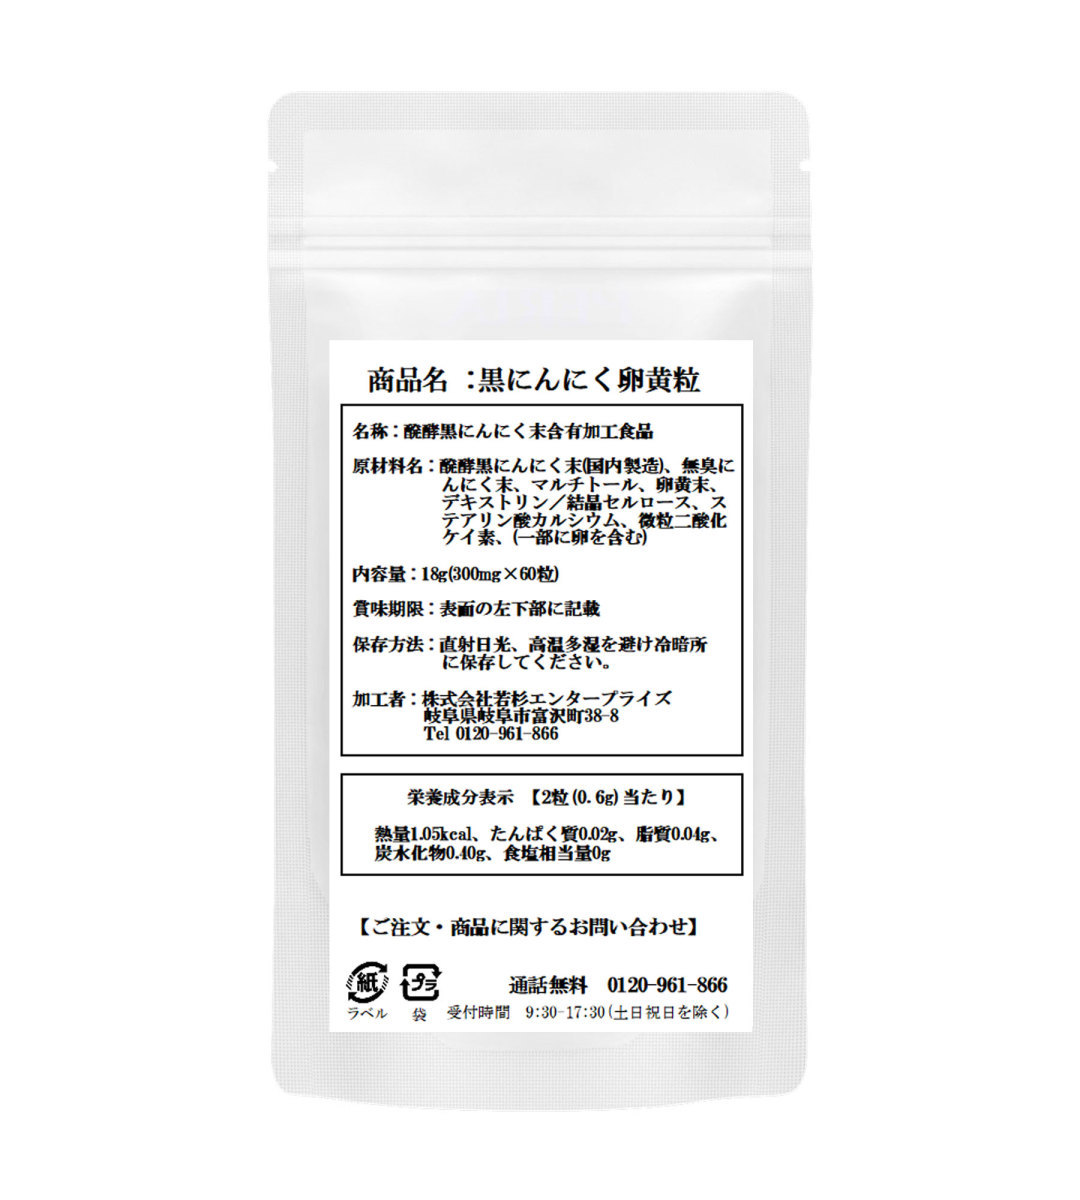 .. black garlic egg yolk supplement 60 bead 2 sack set total 120 bead approximately 2. month minute Aomori prefecture production Fukuchi white kind use pills . type . change 